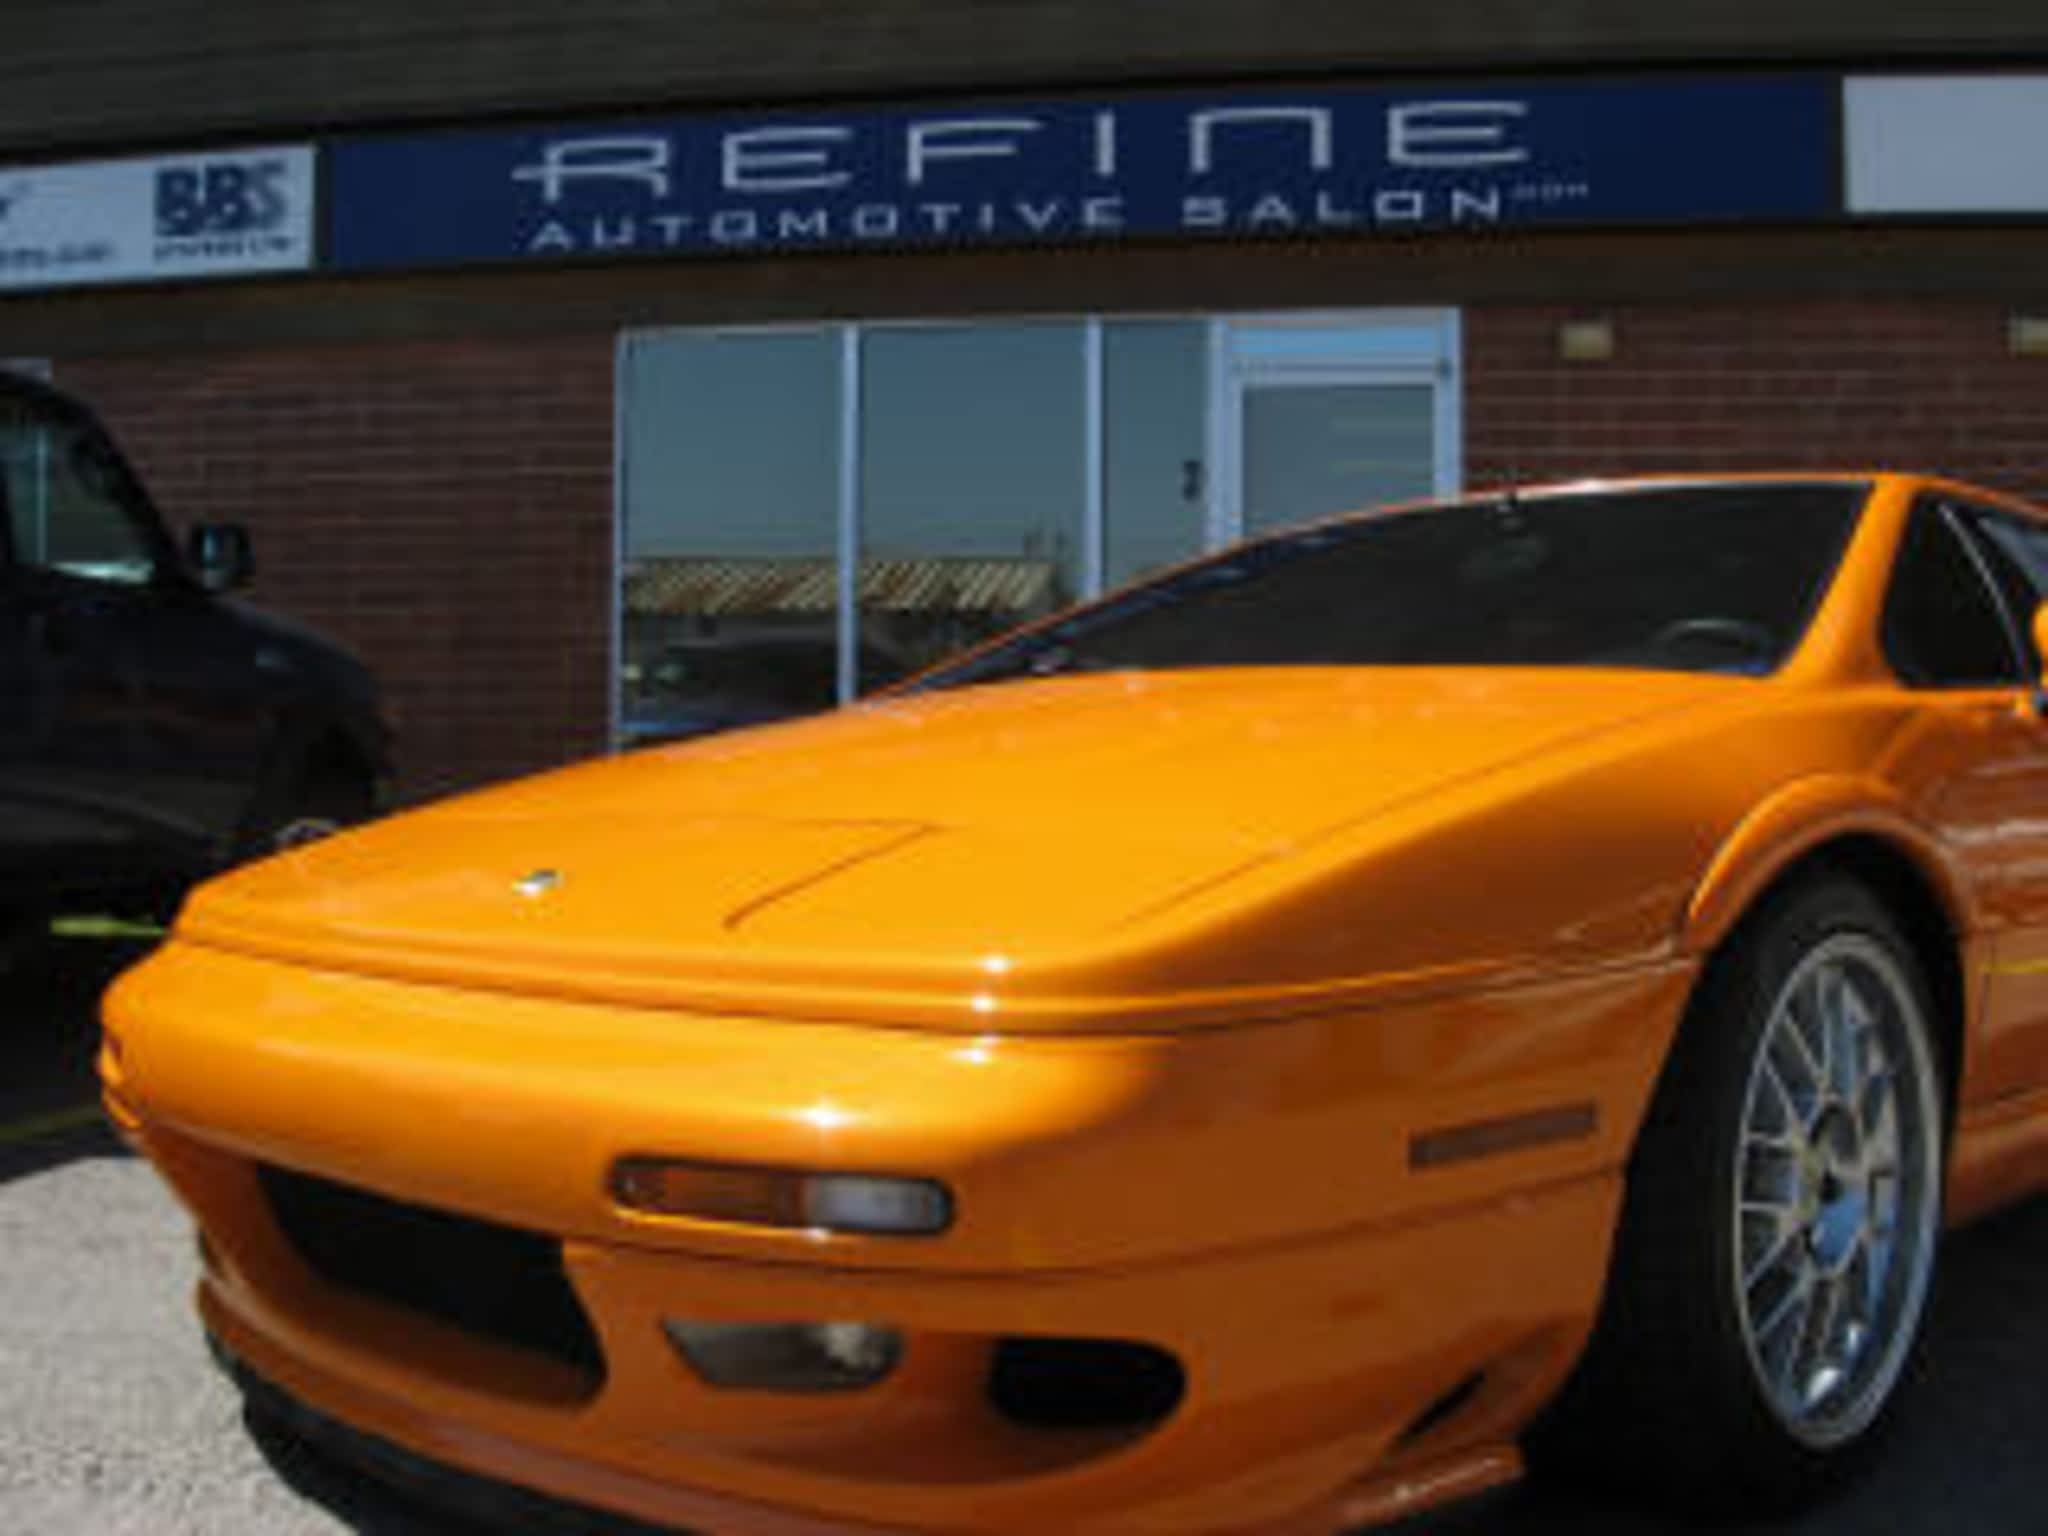 photo Refine Automotive Salon